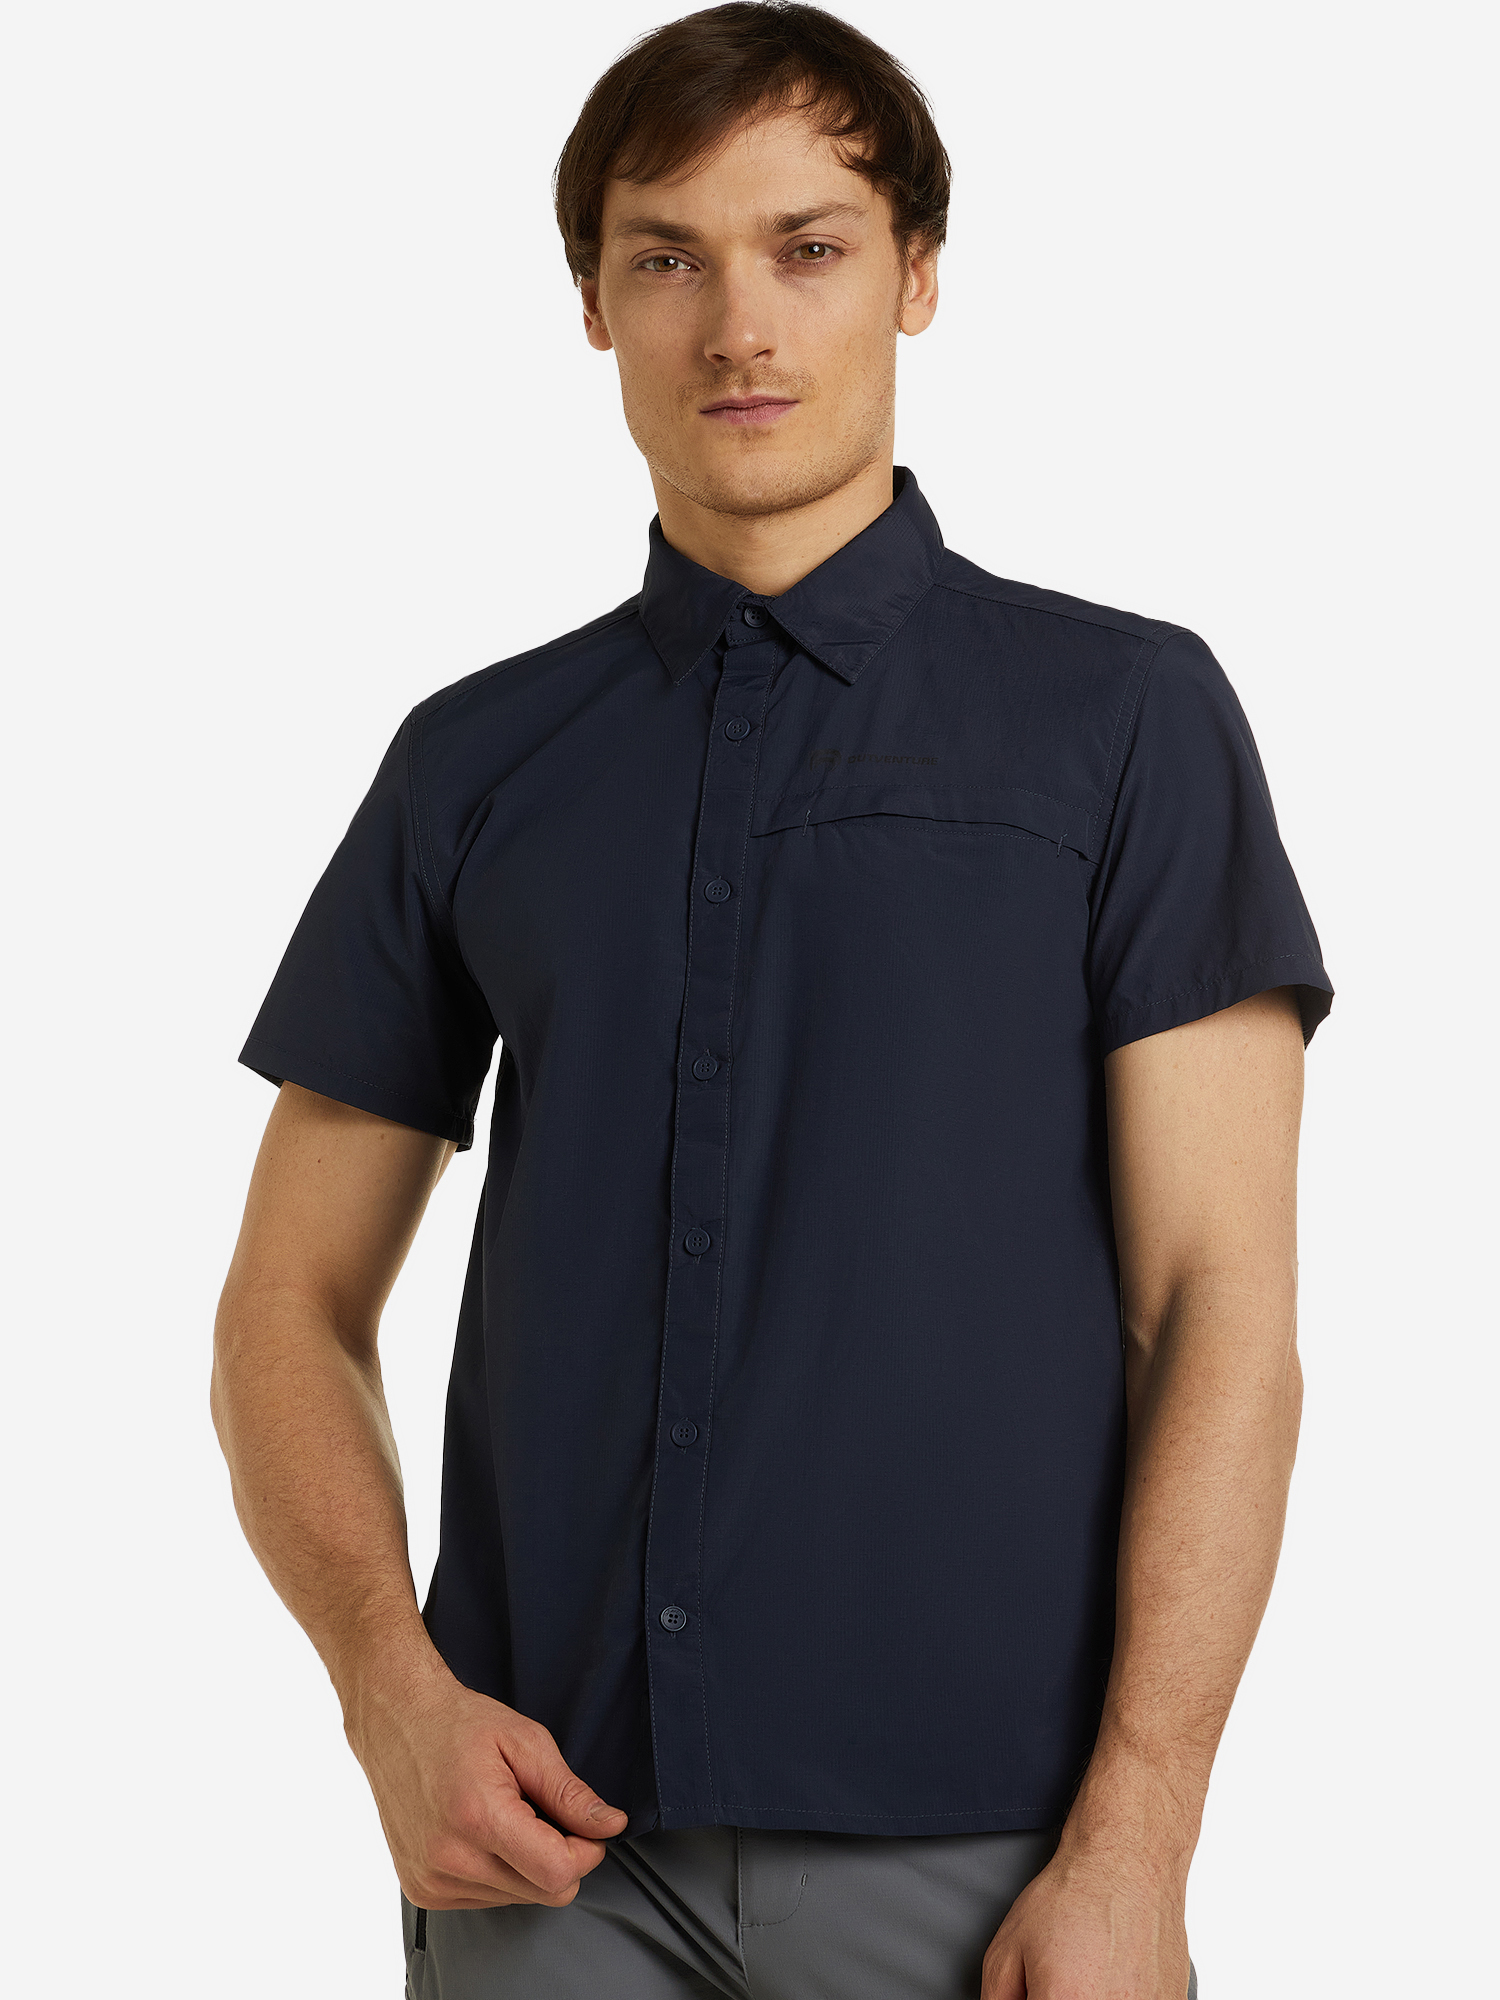 Рубашка с коротким рукавом мужская Outventure, Синий рубашка с коротким рукавом мужская outventure синий